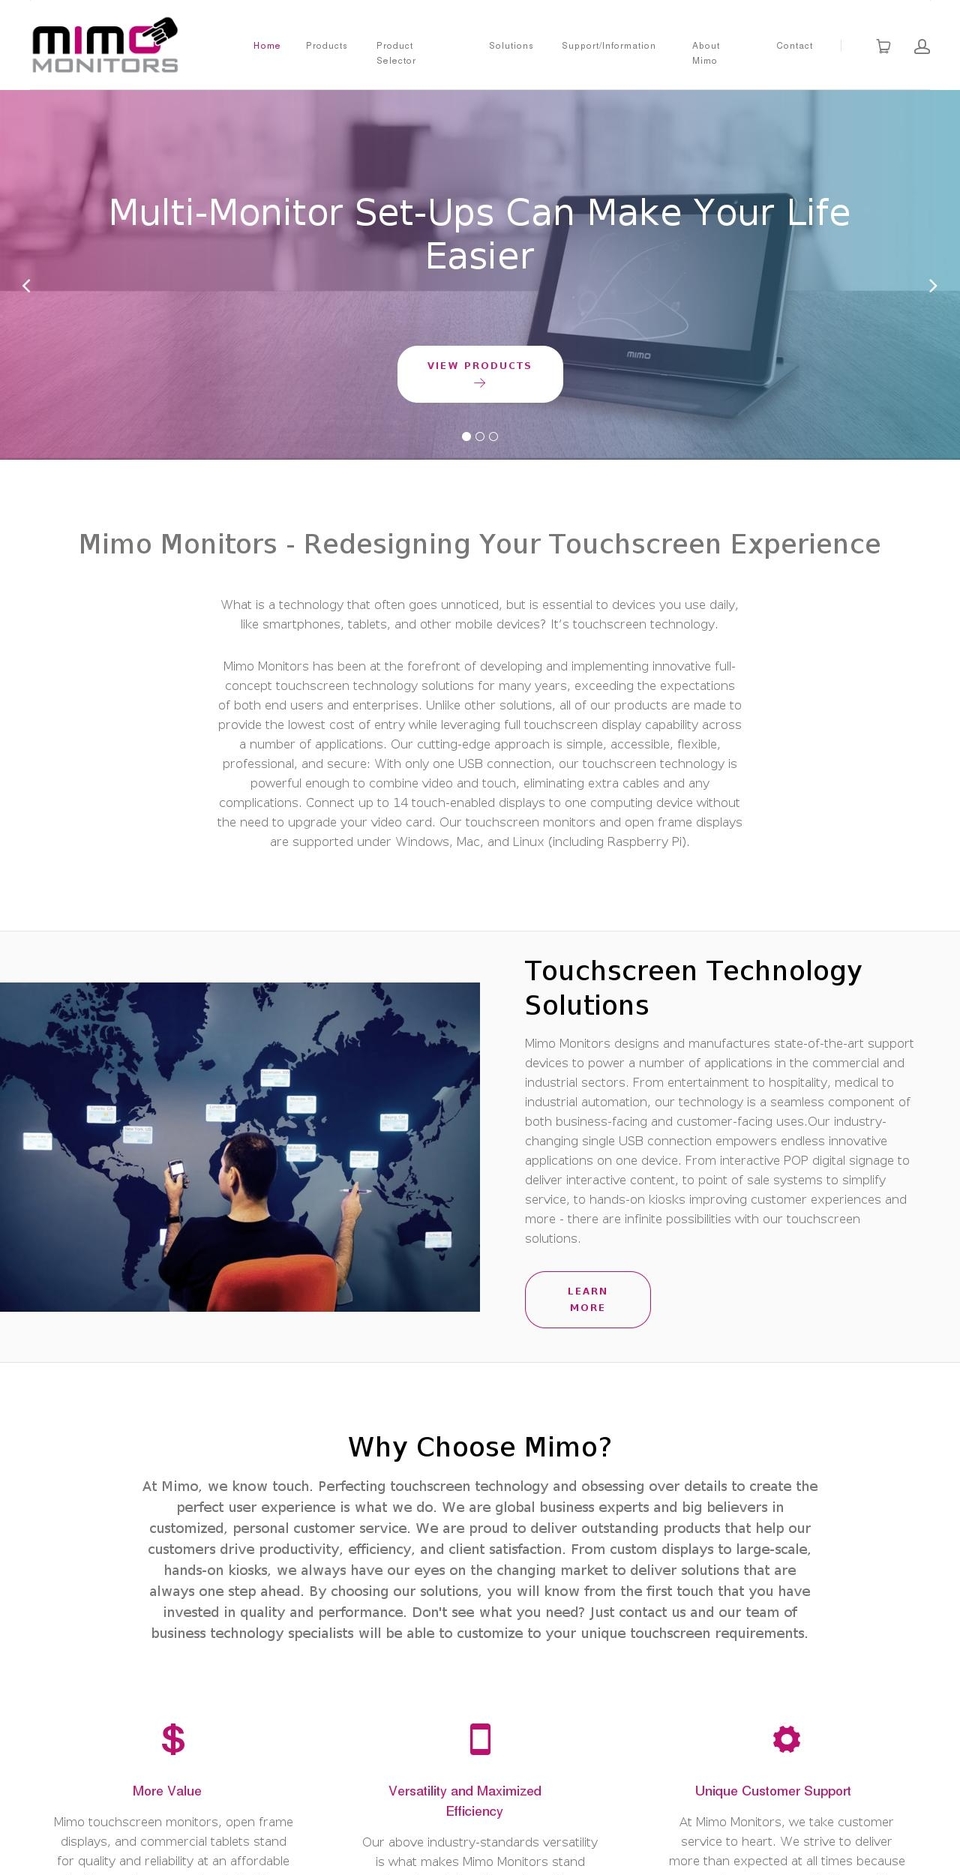 mimomonitors.com shopify website screenshot